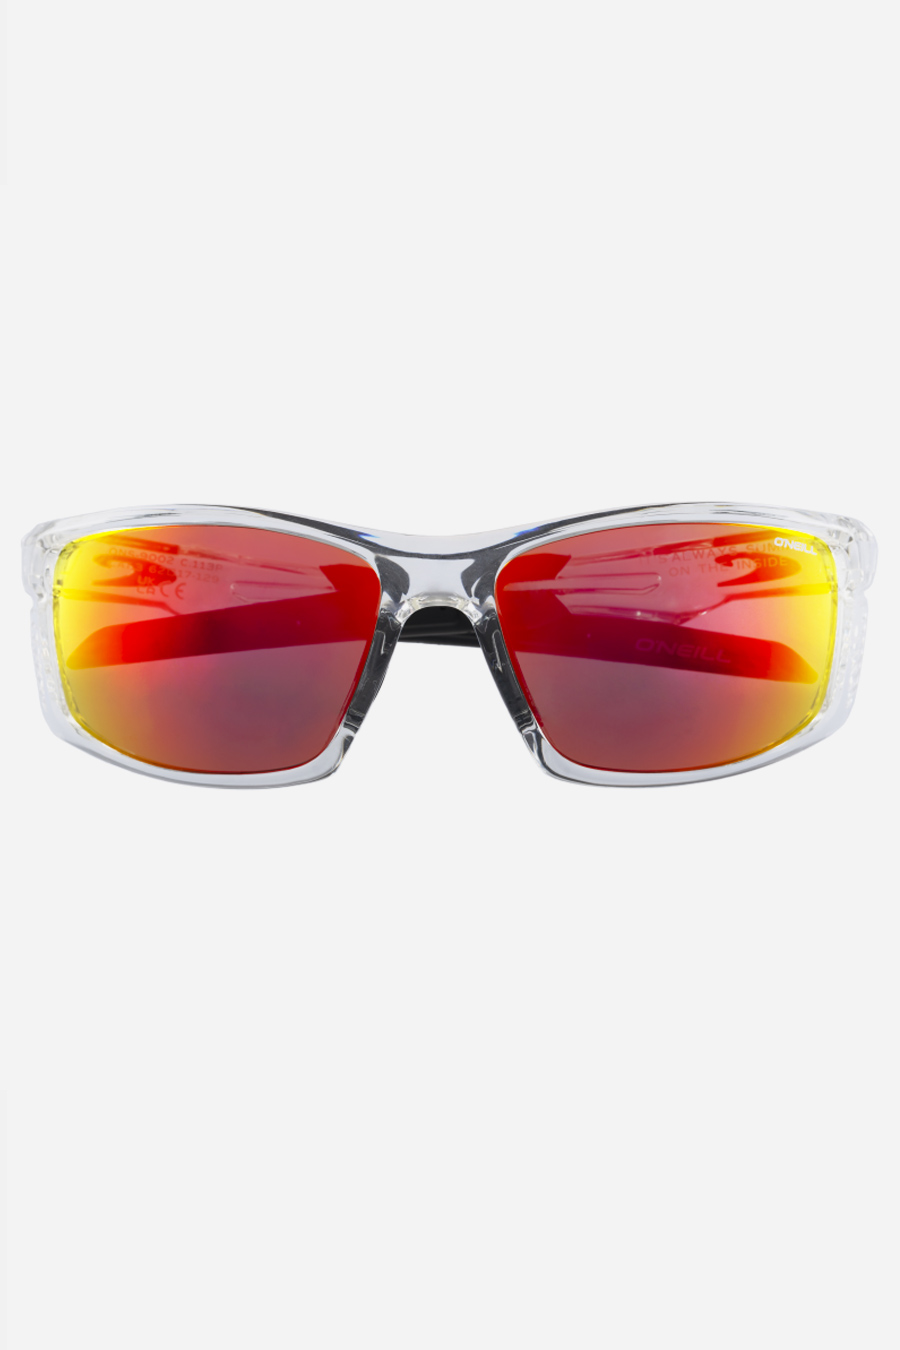 Солнечные очки ONEILL ONS-9002-20-113P